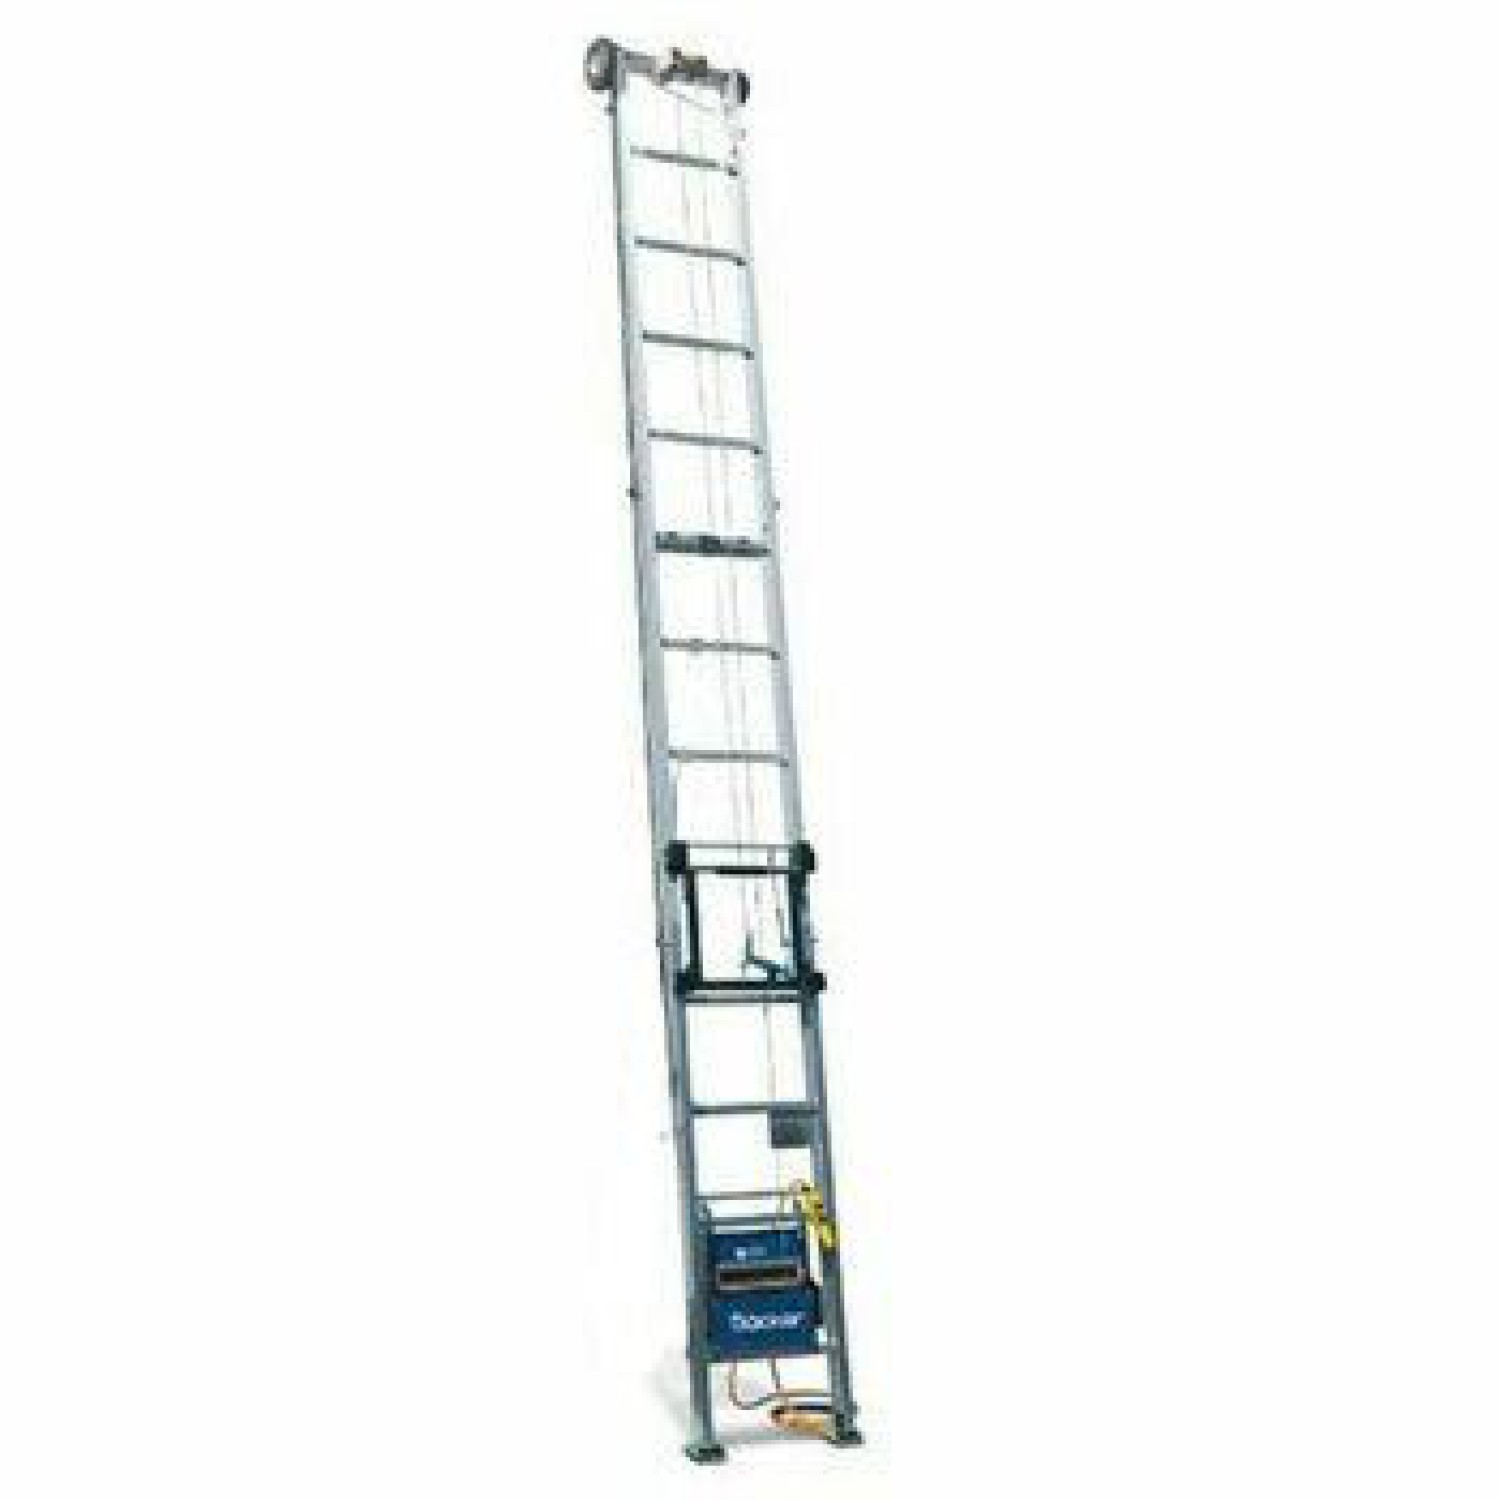 Böcker Ladderlift Toplift standaard 11,3m